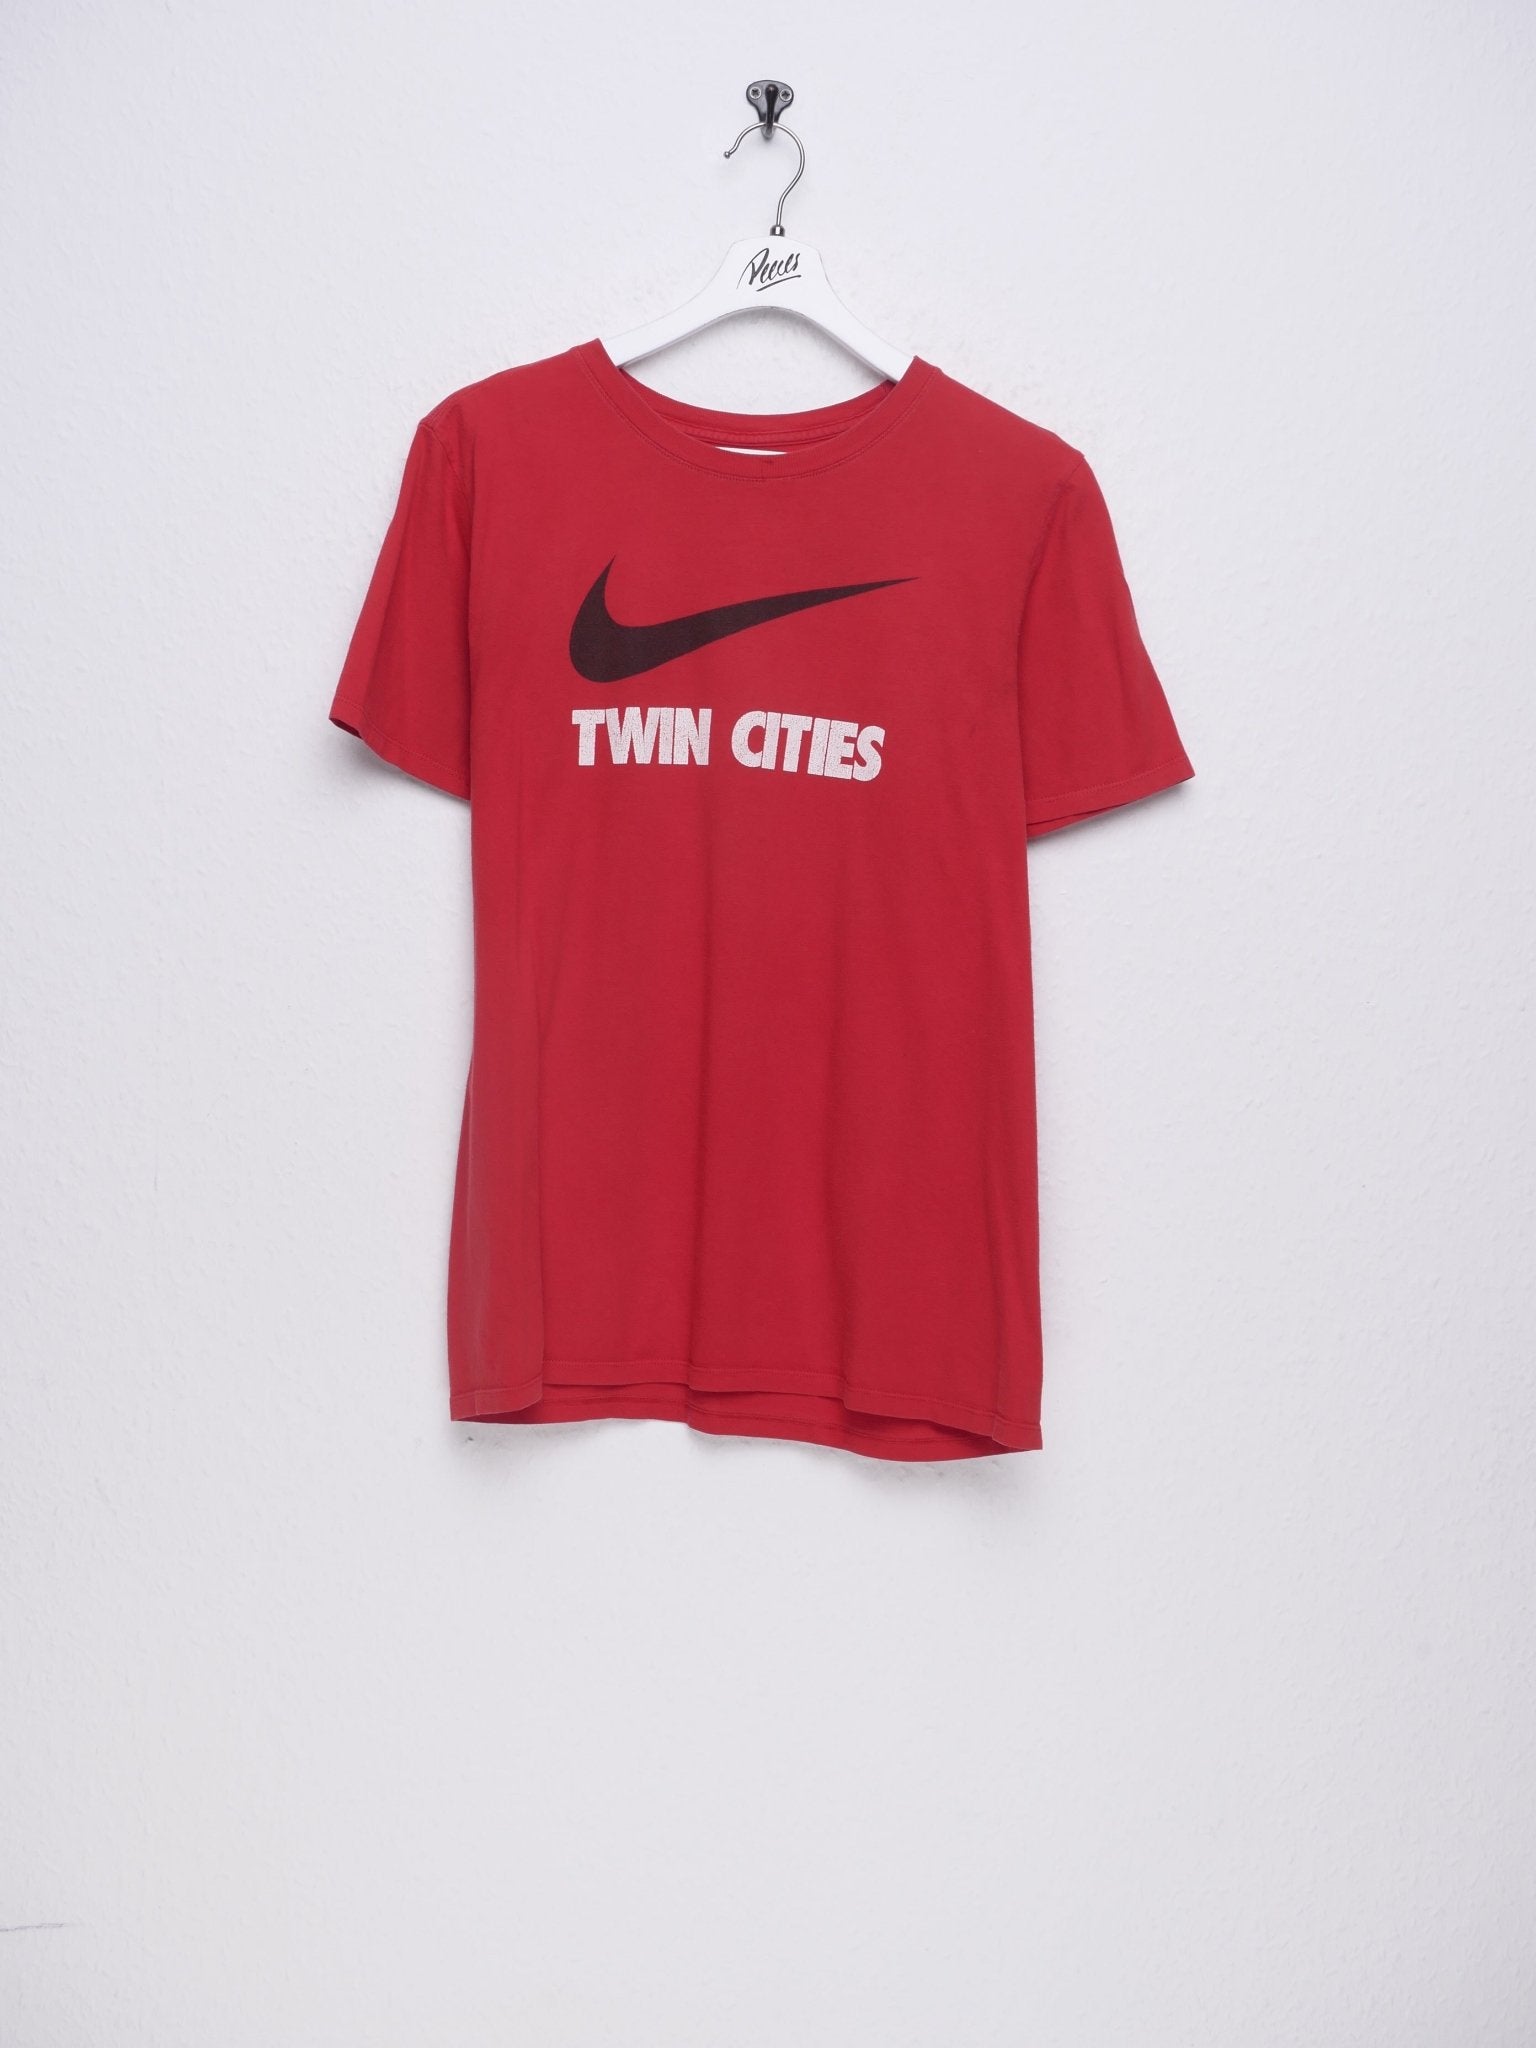 Nike printed Swoosh Vintage Shirt - Peeces